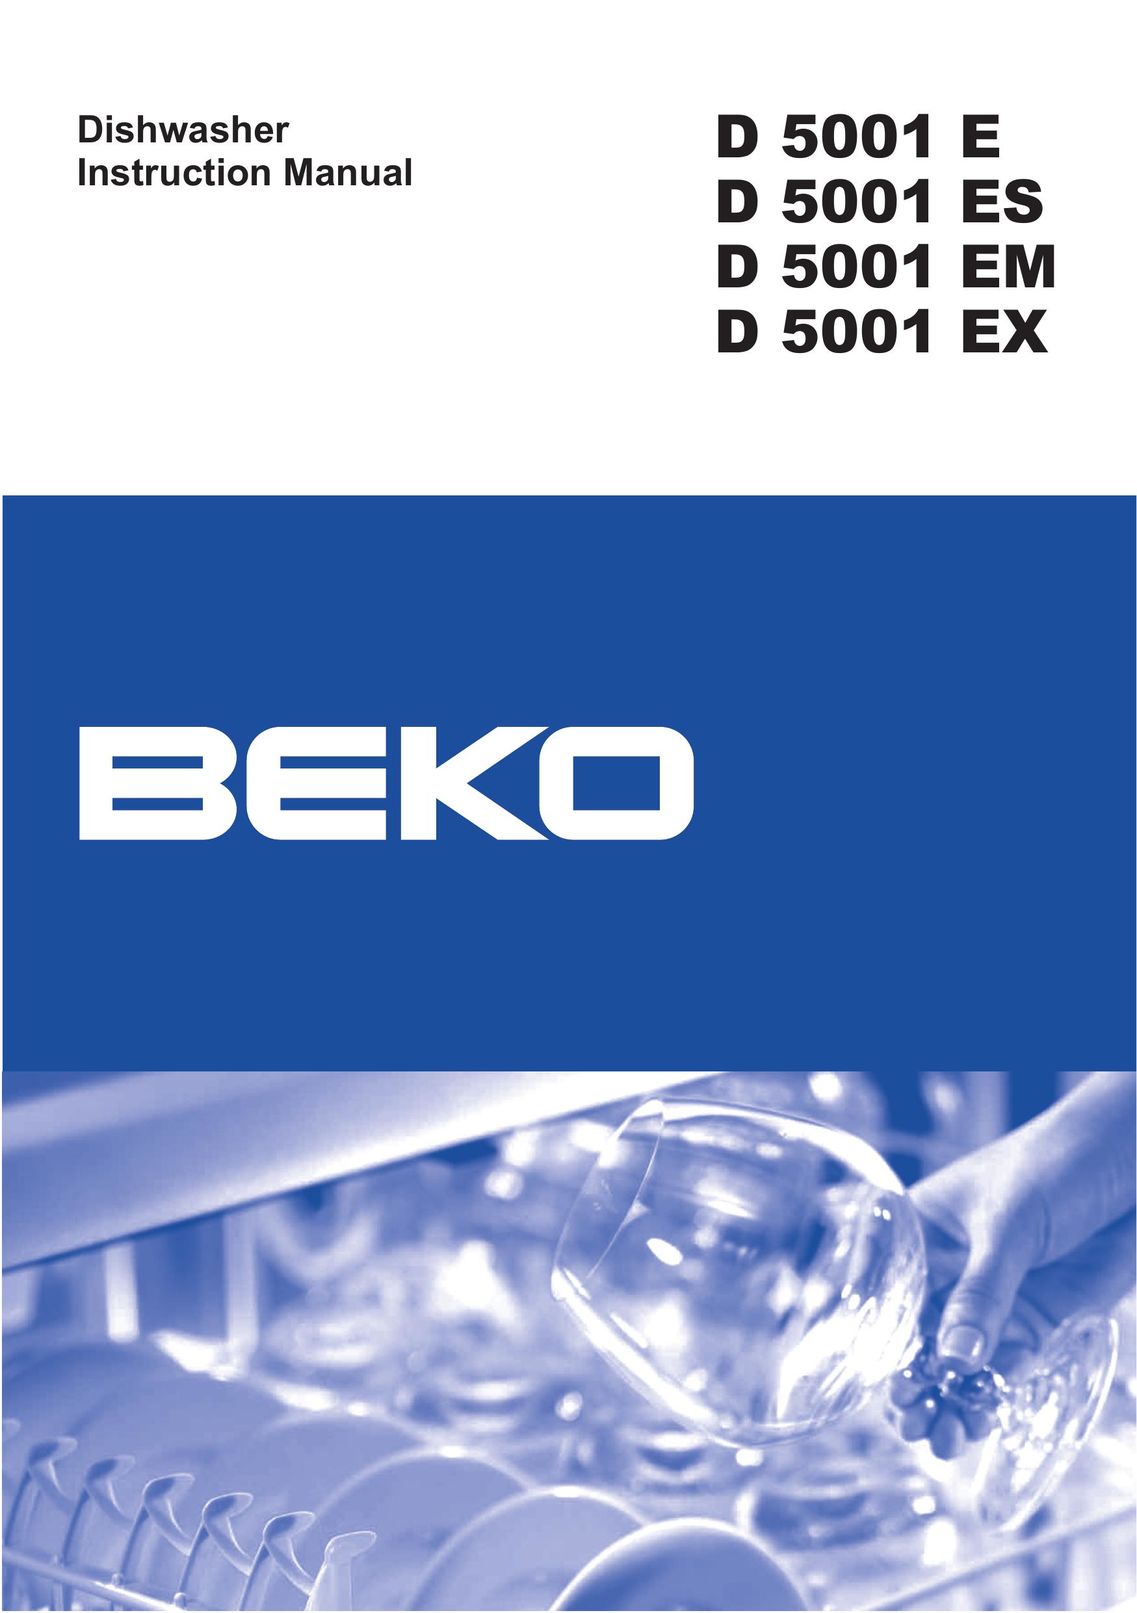 Beko D 5001 EX Dishwasher User Manual